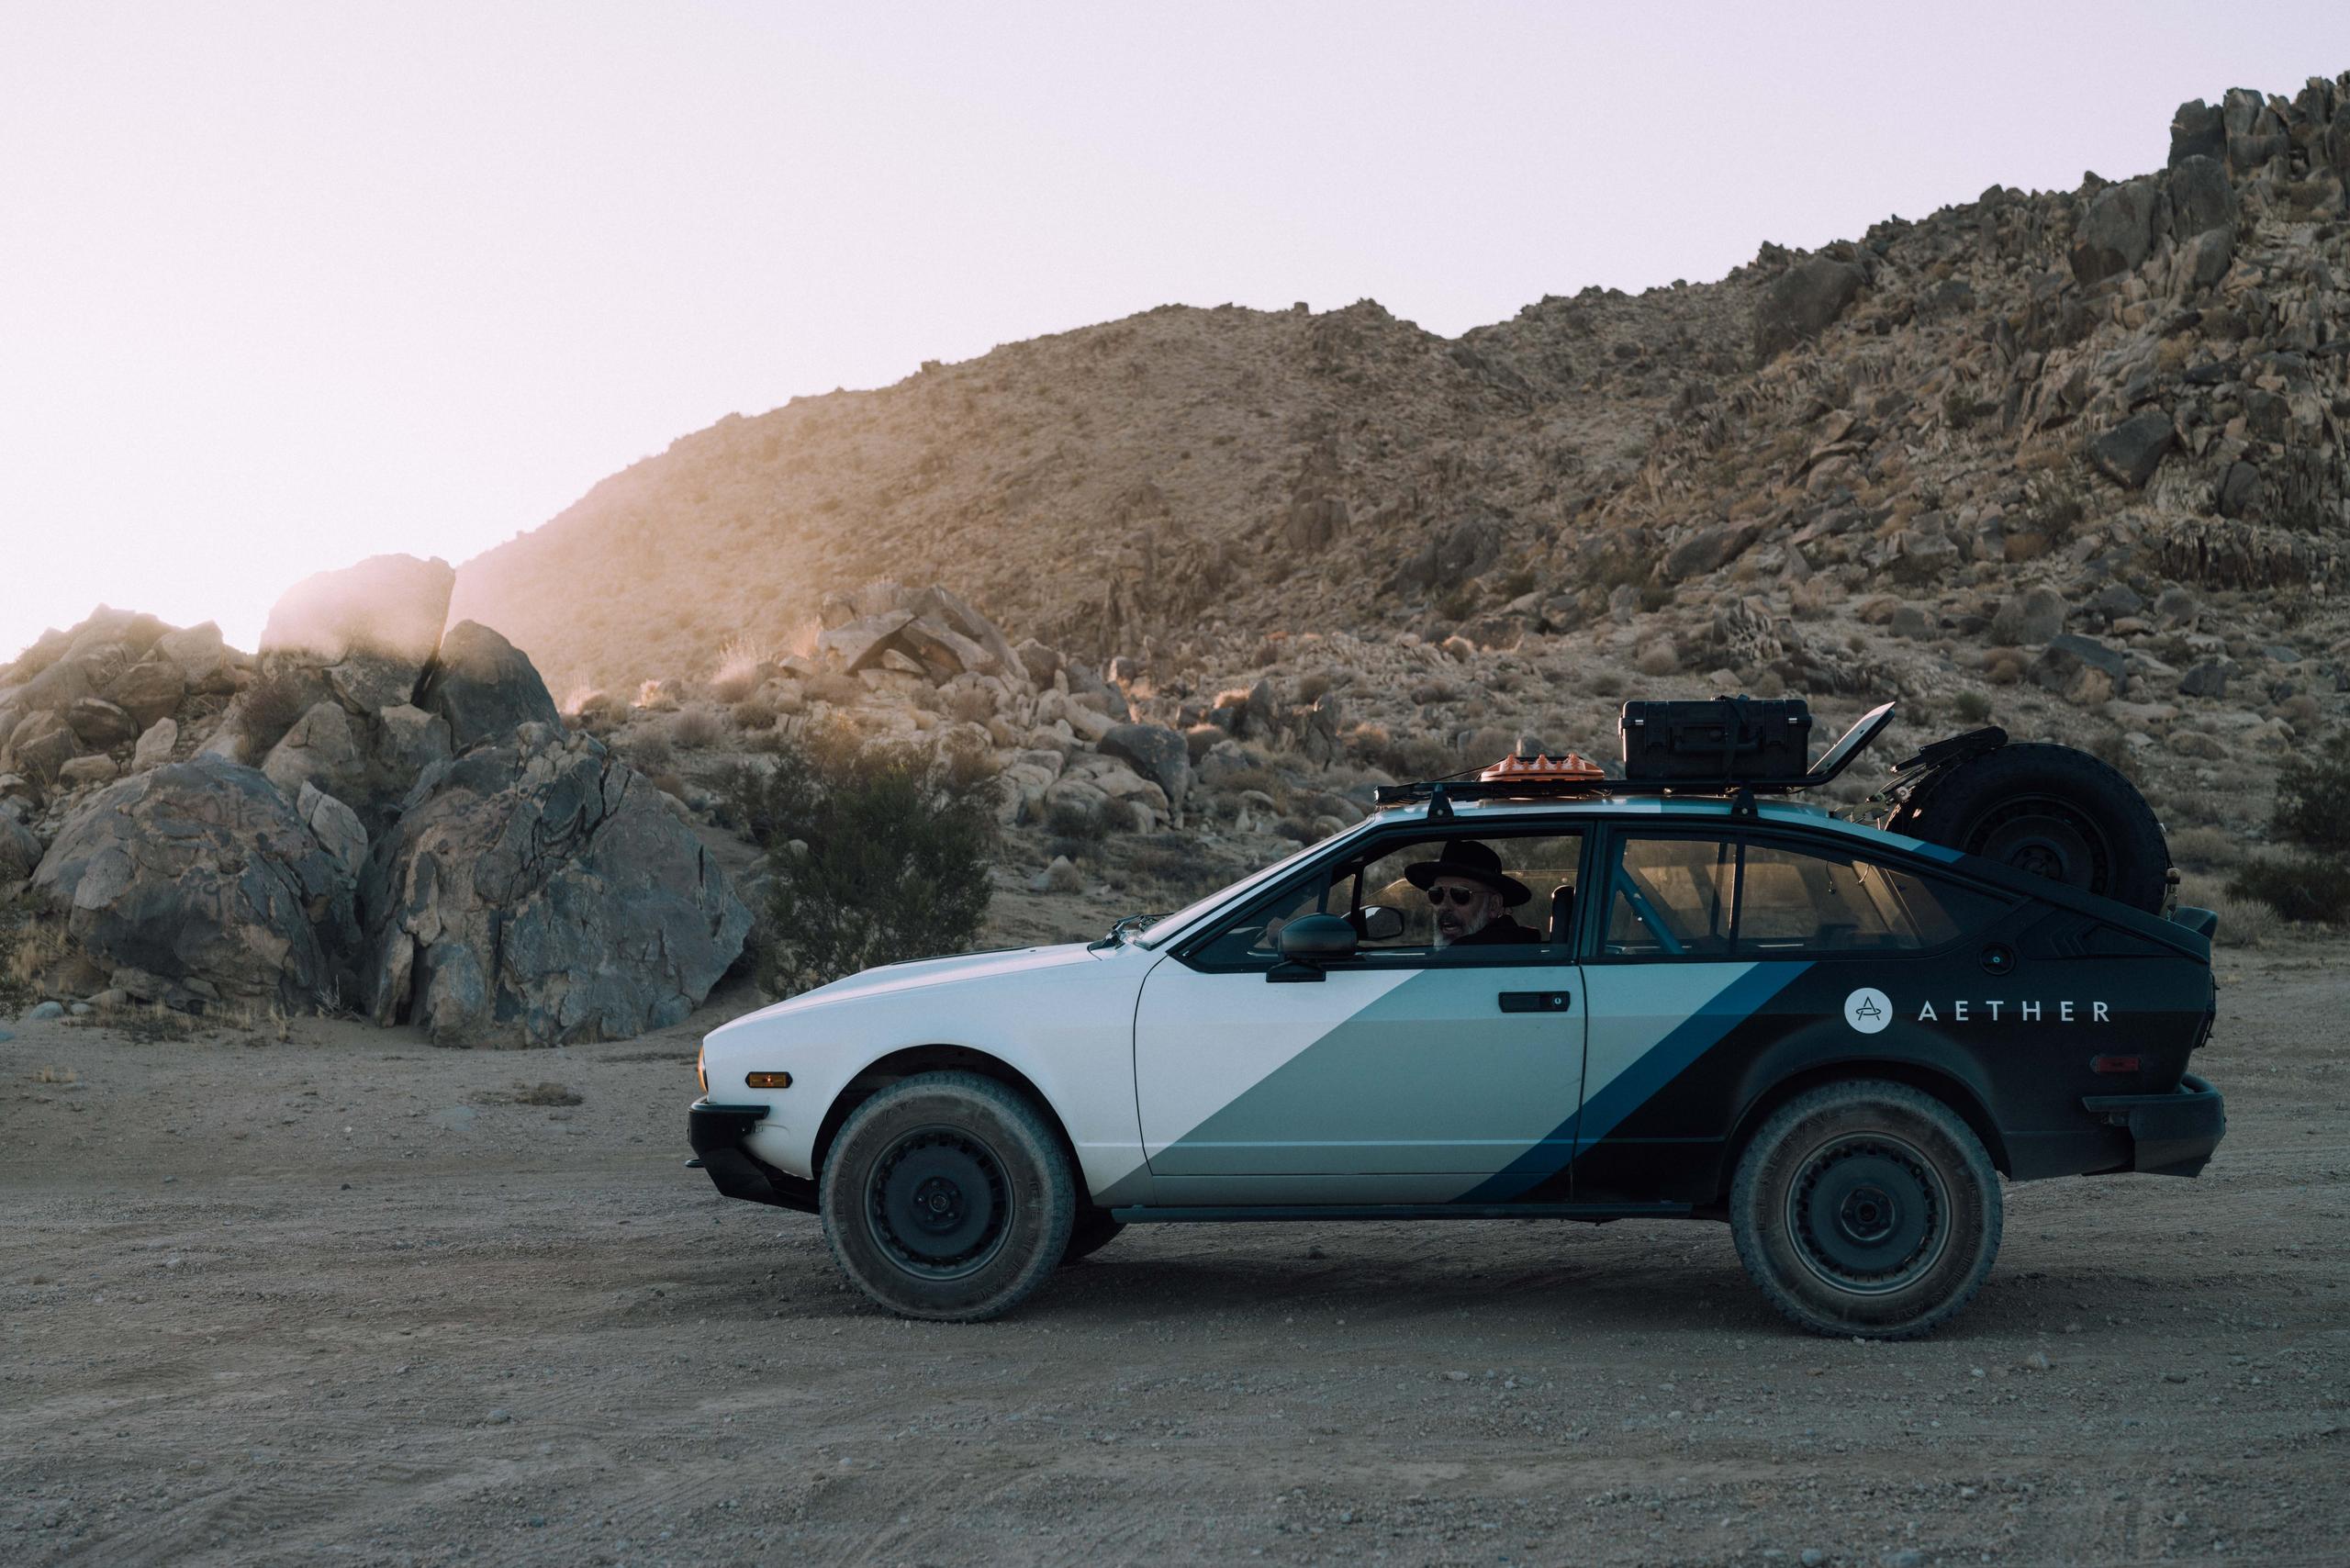 AETHER's Alpine Alfa car in a desert landscape